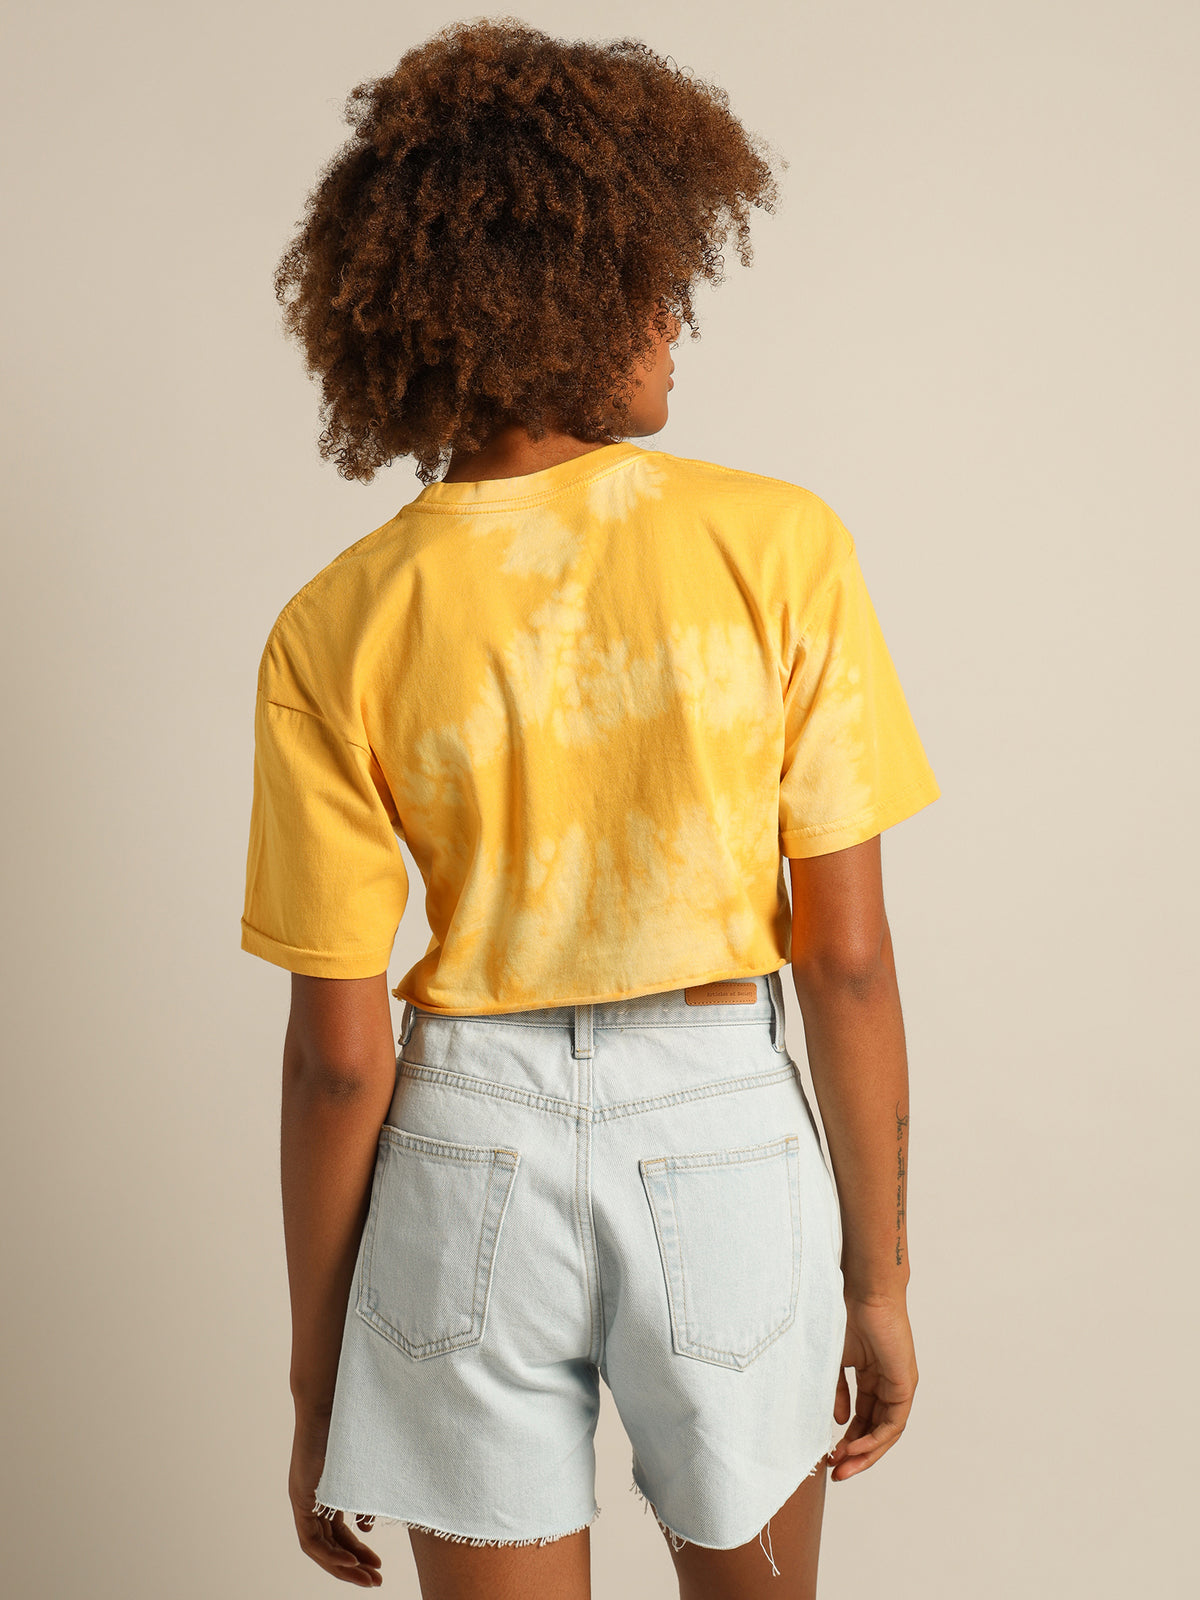 HWC Vintage Crop T-Shirt in Golden